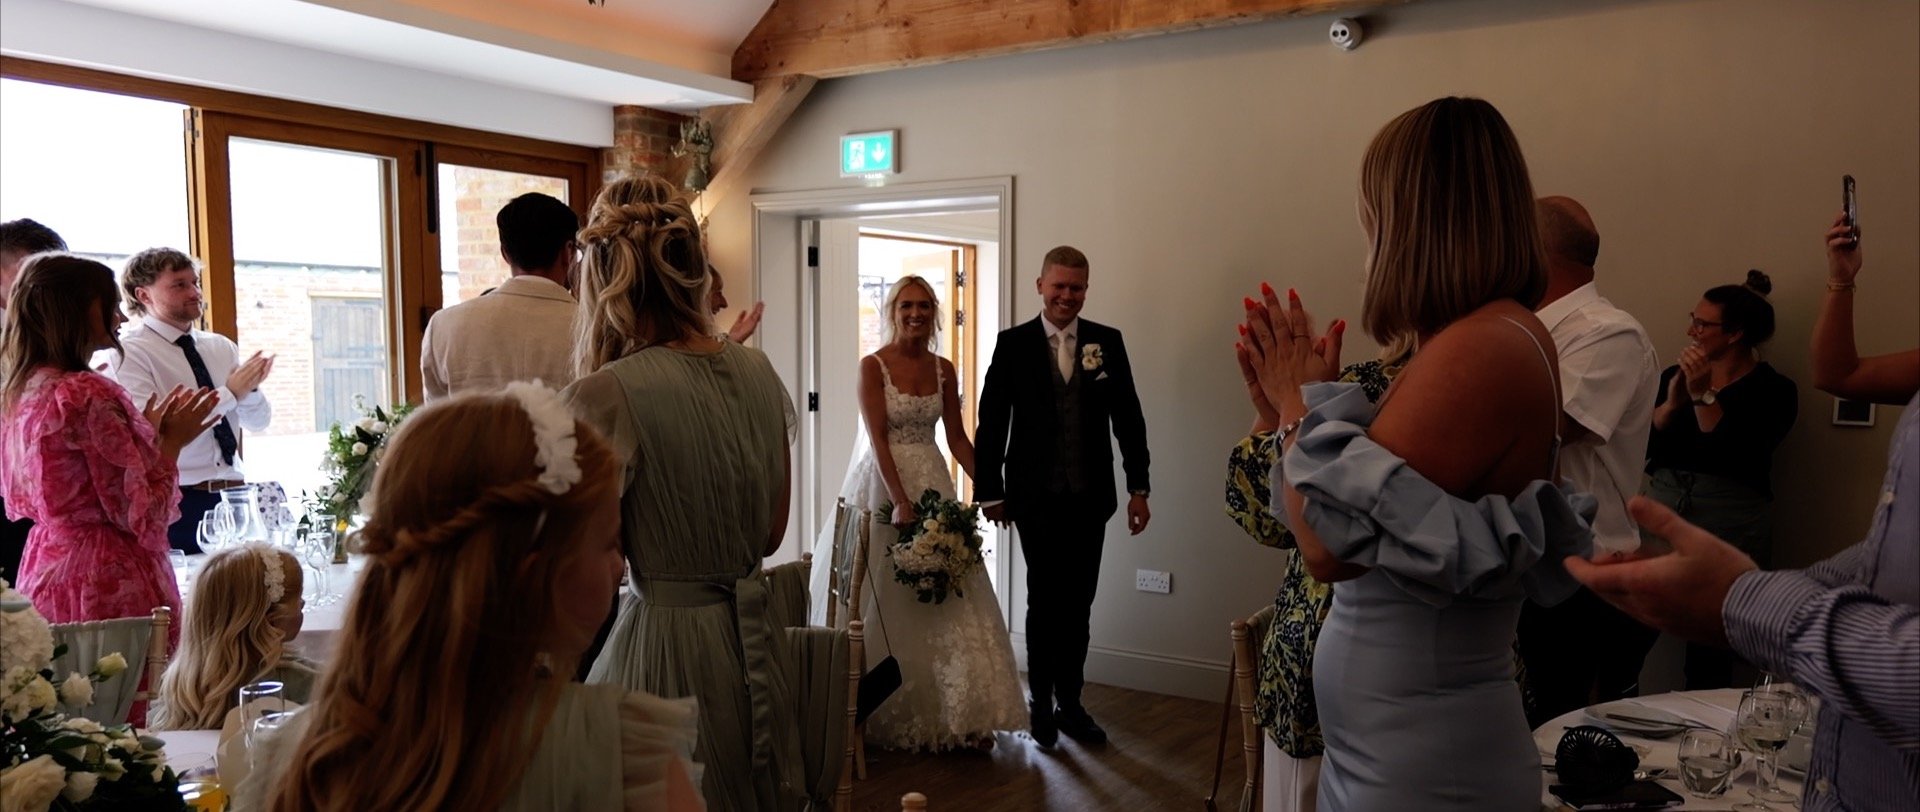 3 Cheers Media - Apton Hall Wedding Video - Into dinner walk.jpg